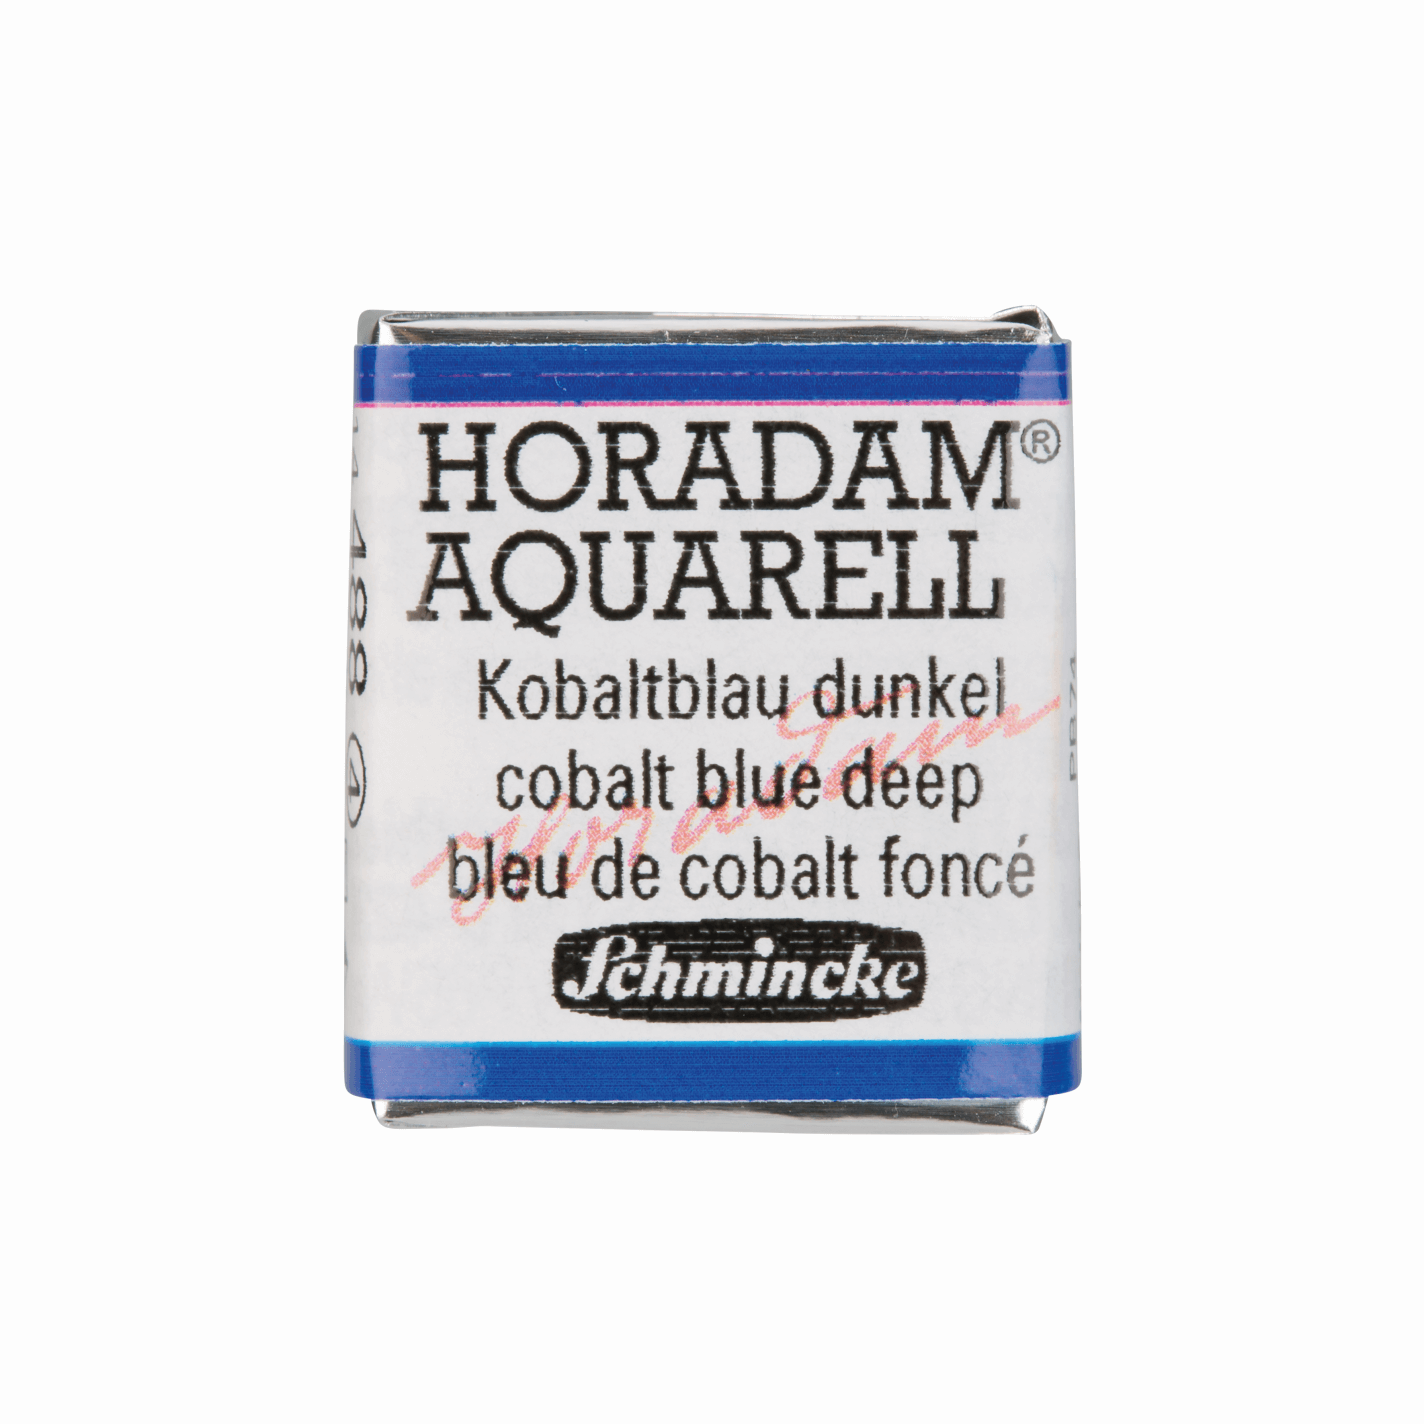 Schmincke Horadam Aquarell pans 1/2 pan Cobalt Blue Deep